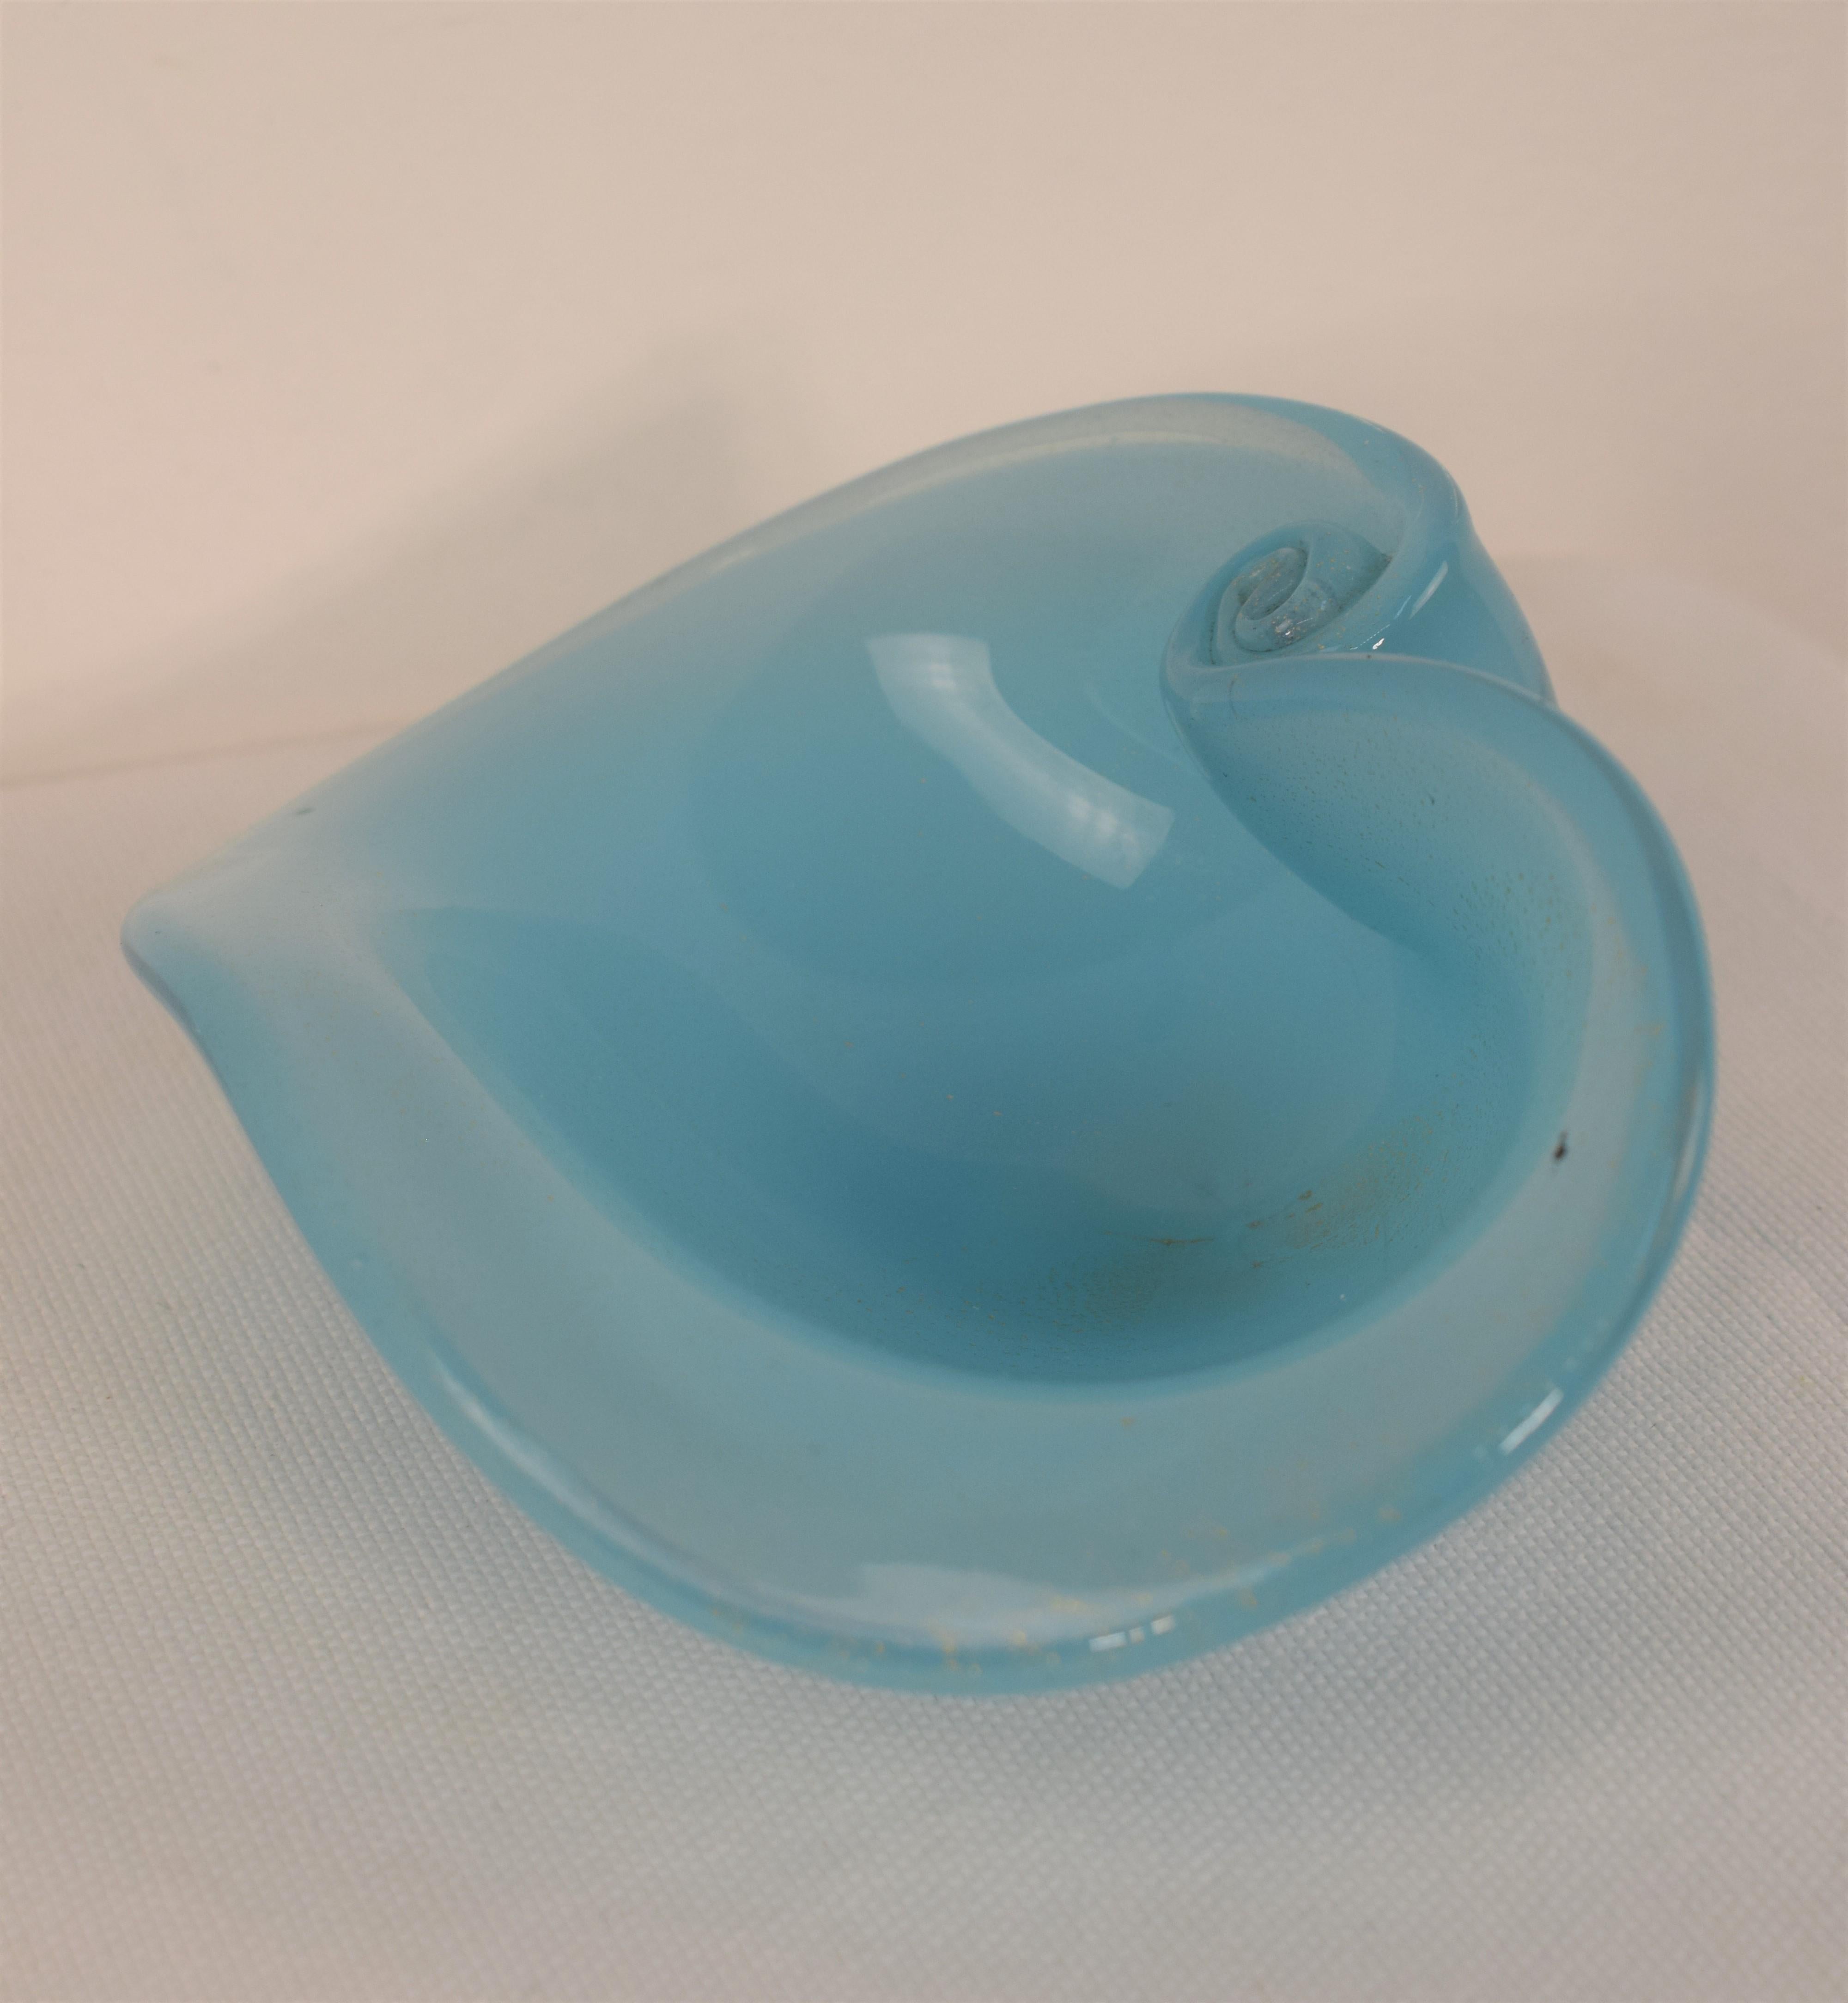 Italian glass bowl, Vistosi, 1970s.
Dimensions: H= 8 cm; W= 15 cm; D=10 cm.